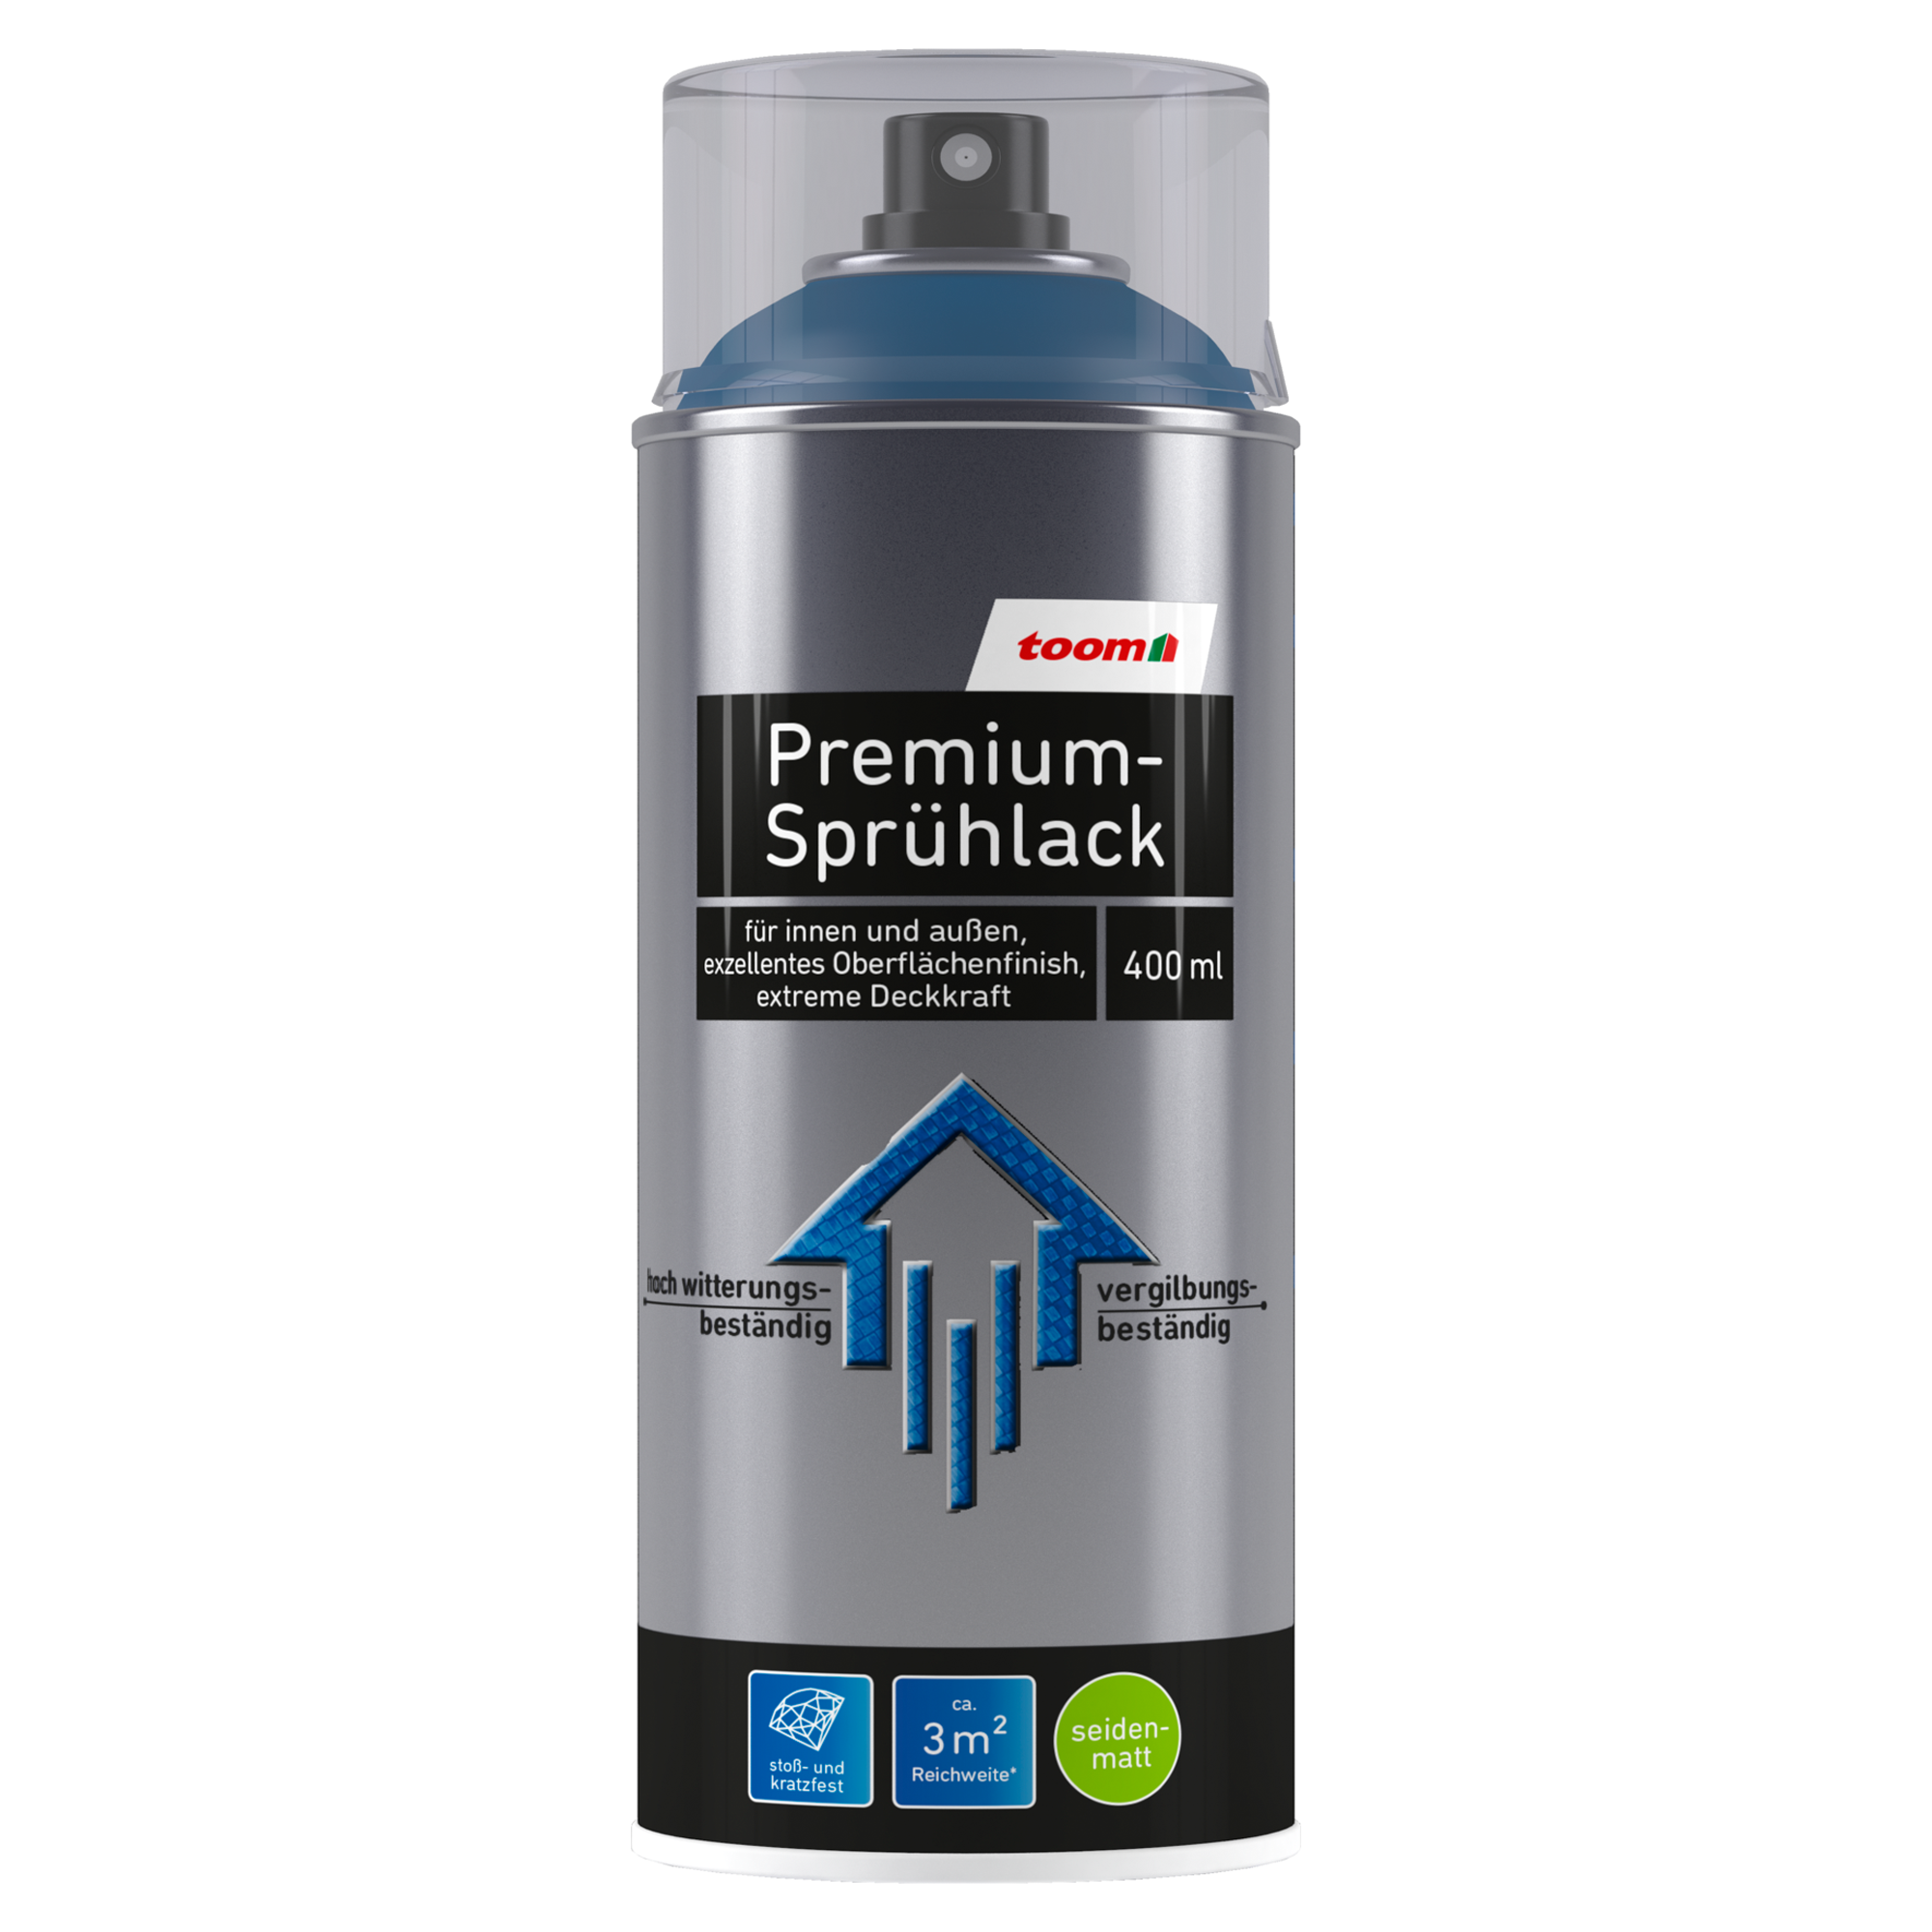 Premium-Sprühlack enzianblau seidenmatt 400 ml + product picture